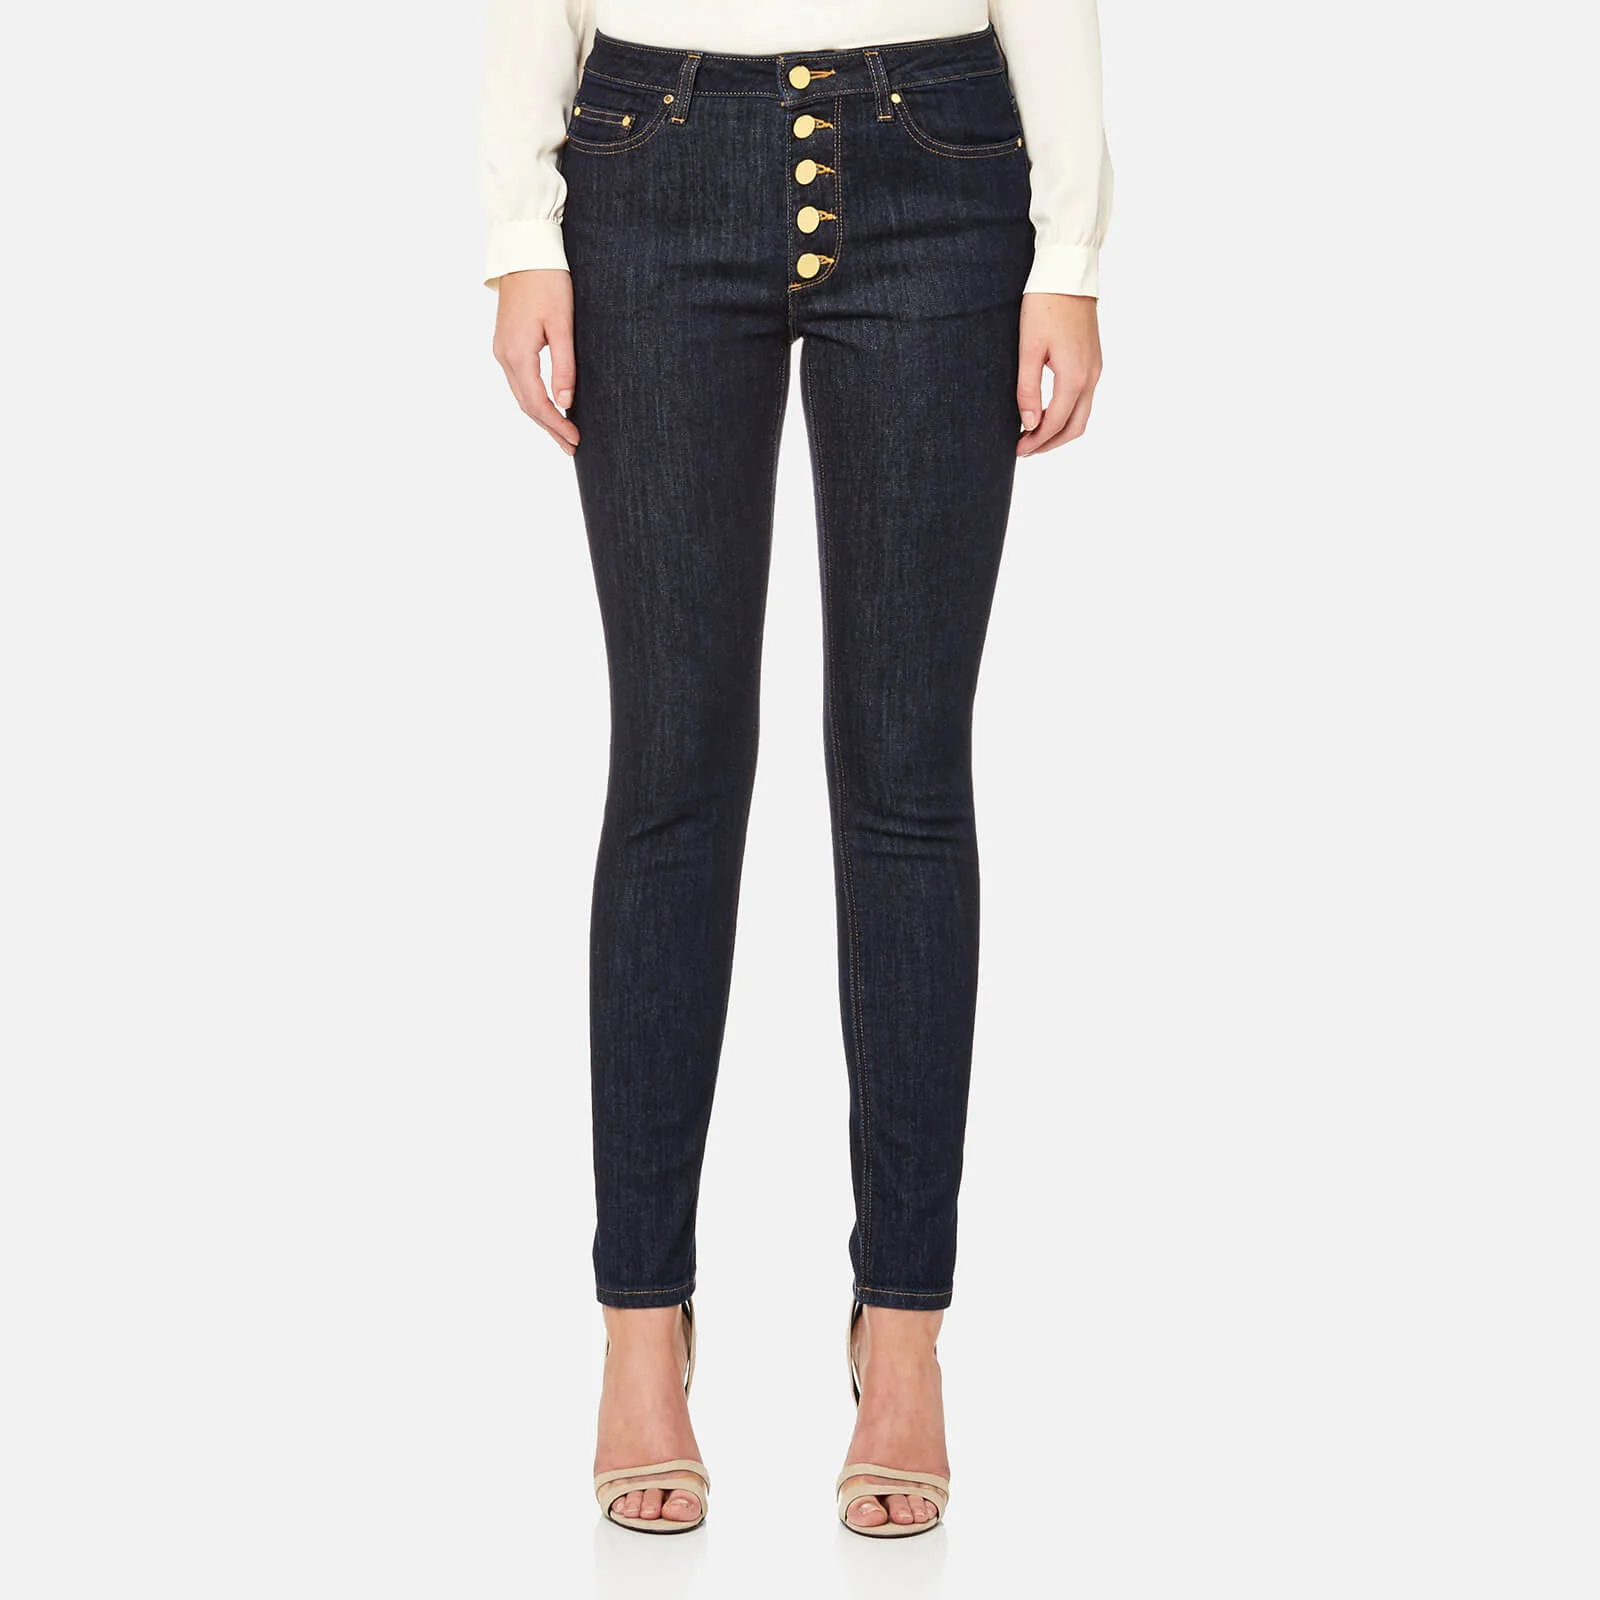 MICHAEL MICHAEL KORS Women's Button Front High Waist Skinny Jeans - Indigo Image 1